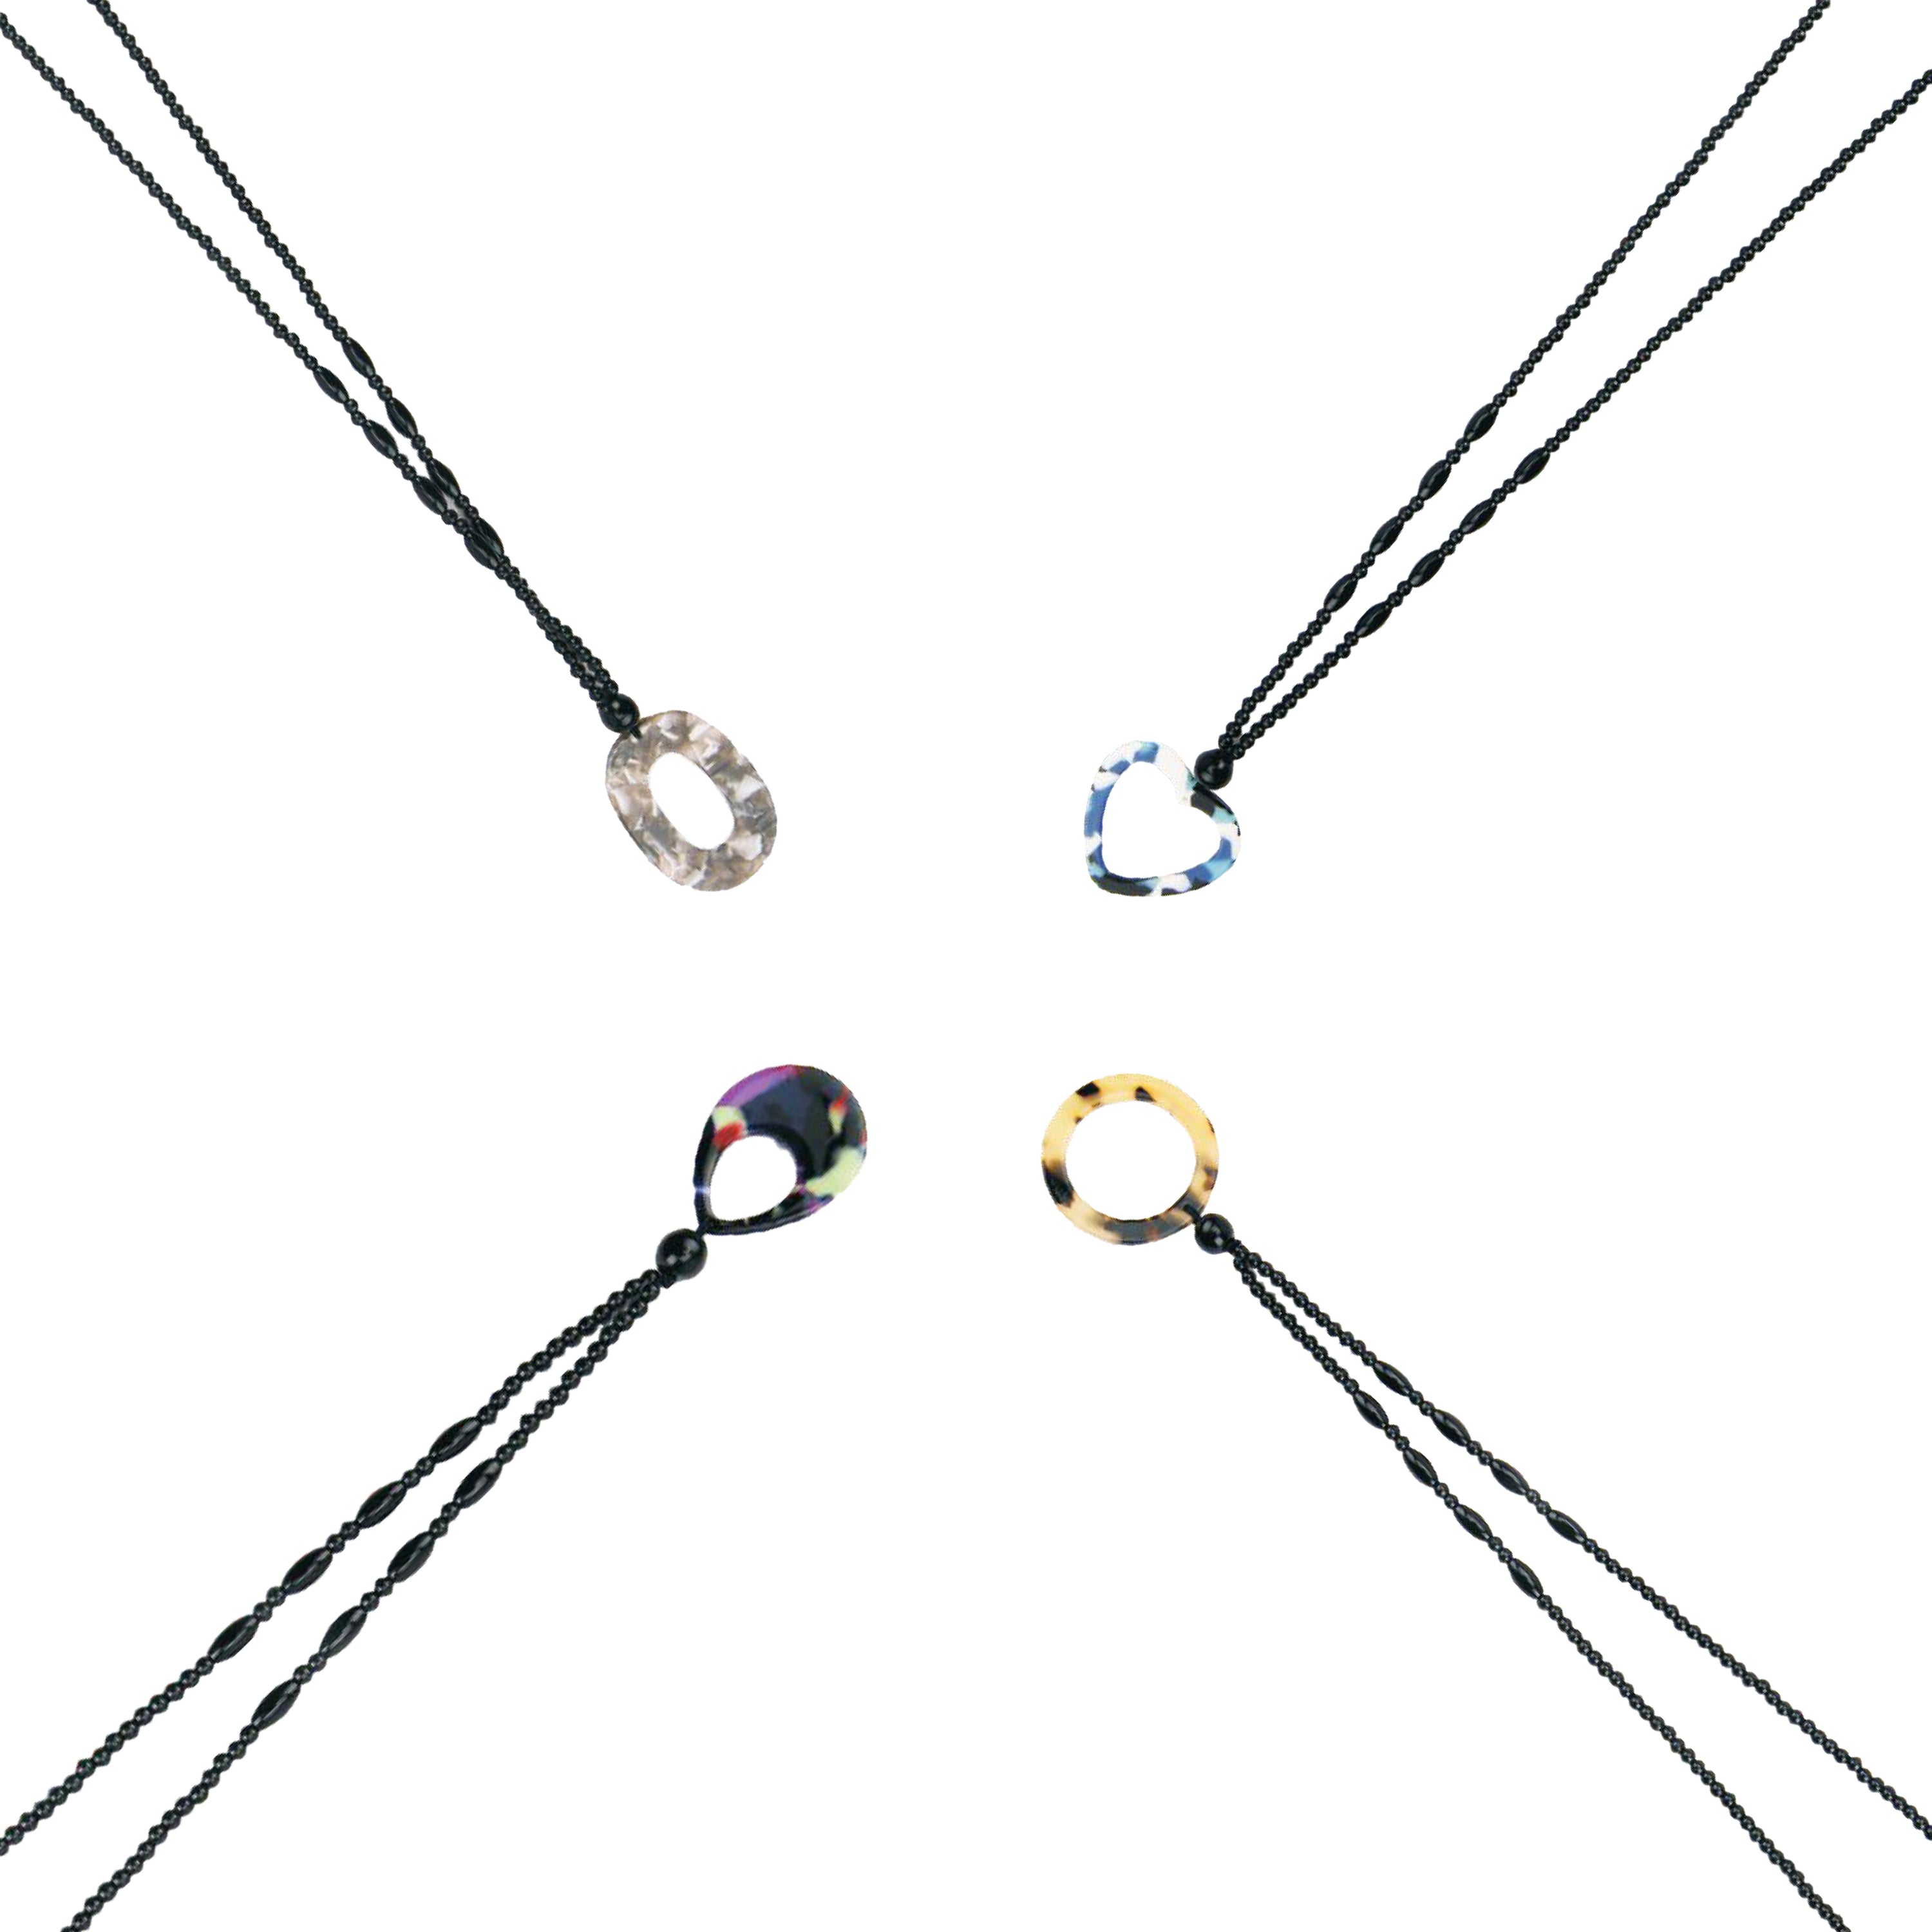 QUICK PICK PACK - Necklace Hangers